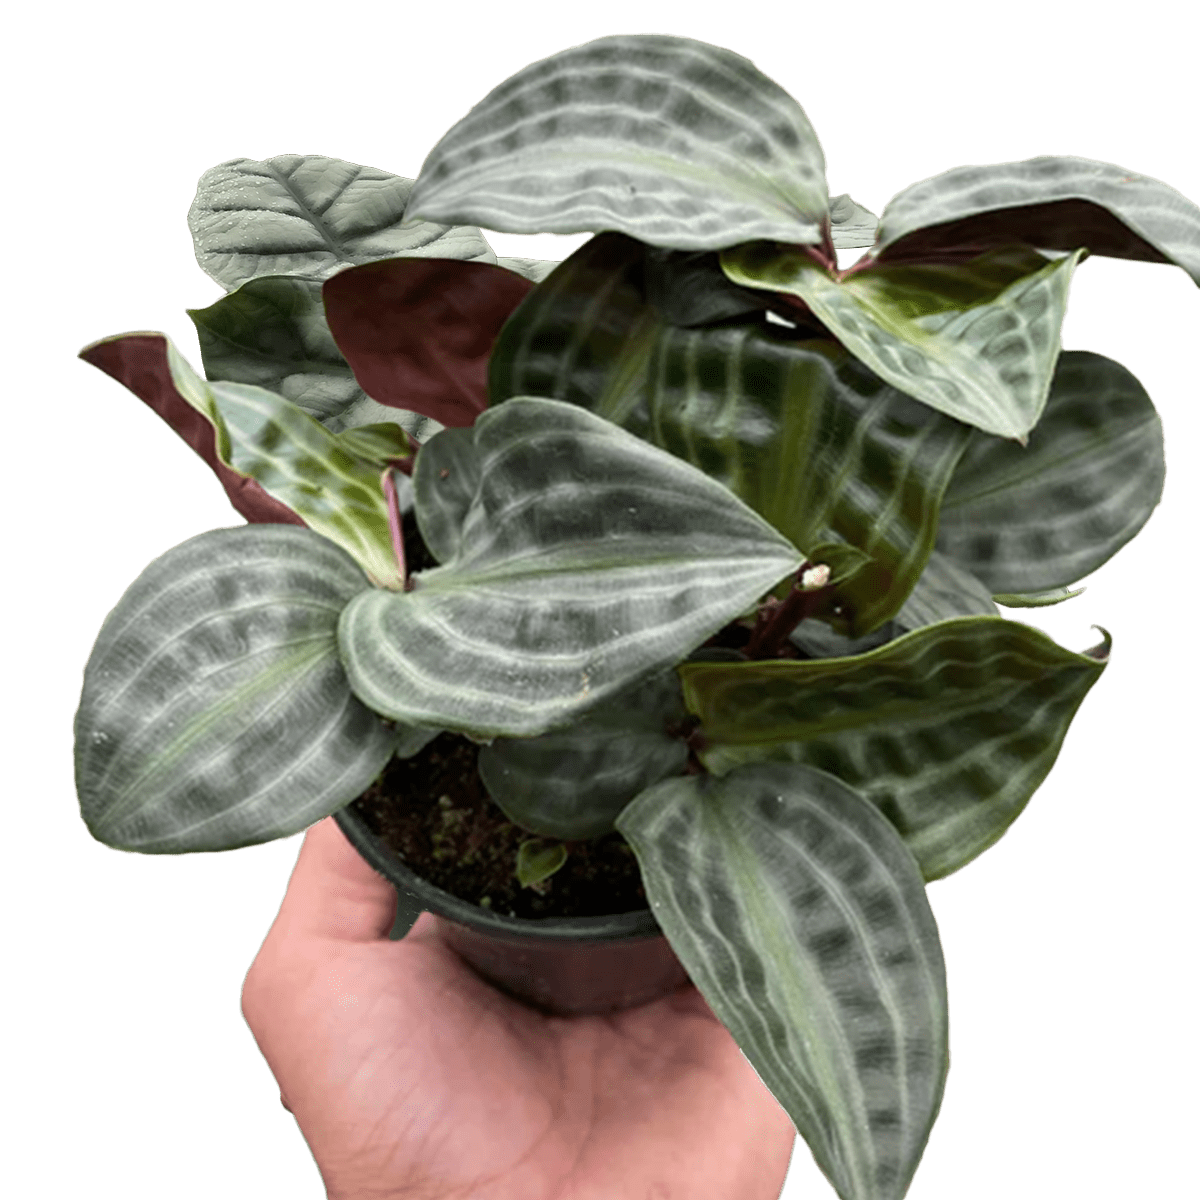 geogenanthus seersucker - best online plant nursery | houseplantsale.com - houseplants for sale online | best indoor plants | forget me not flower market